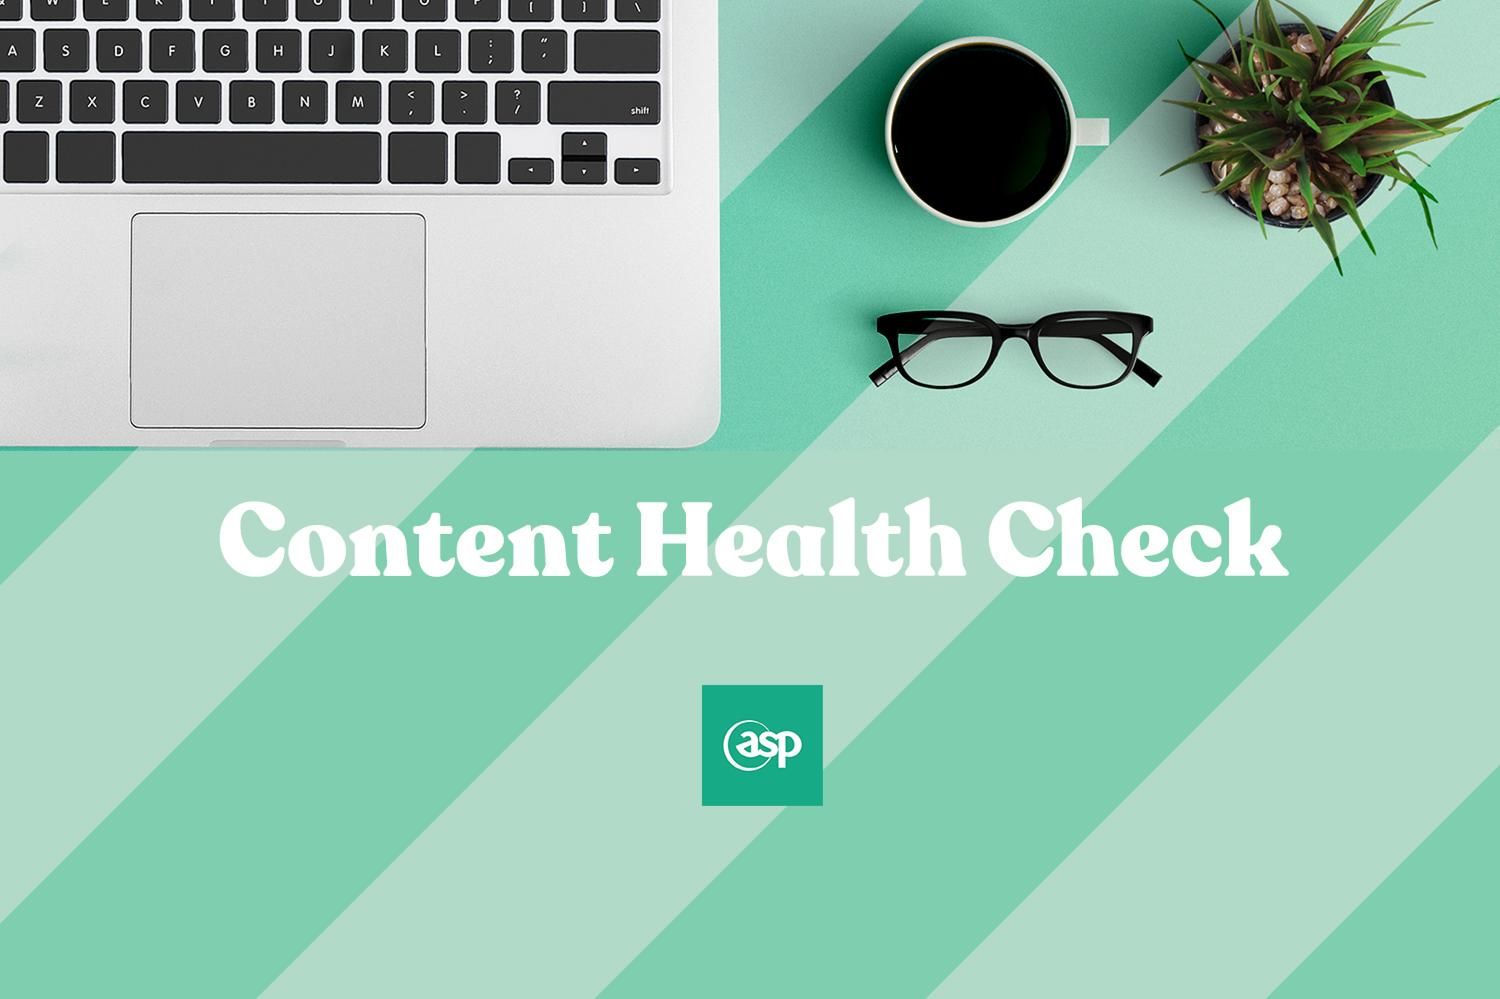 ASP Launch Content Health Check